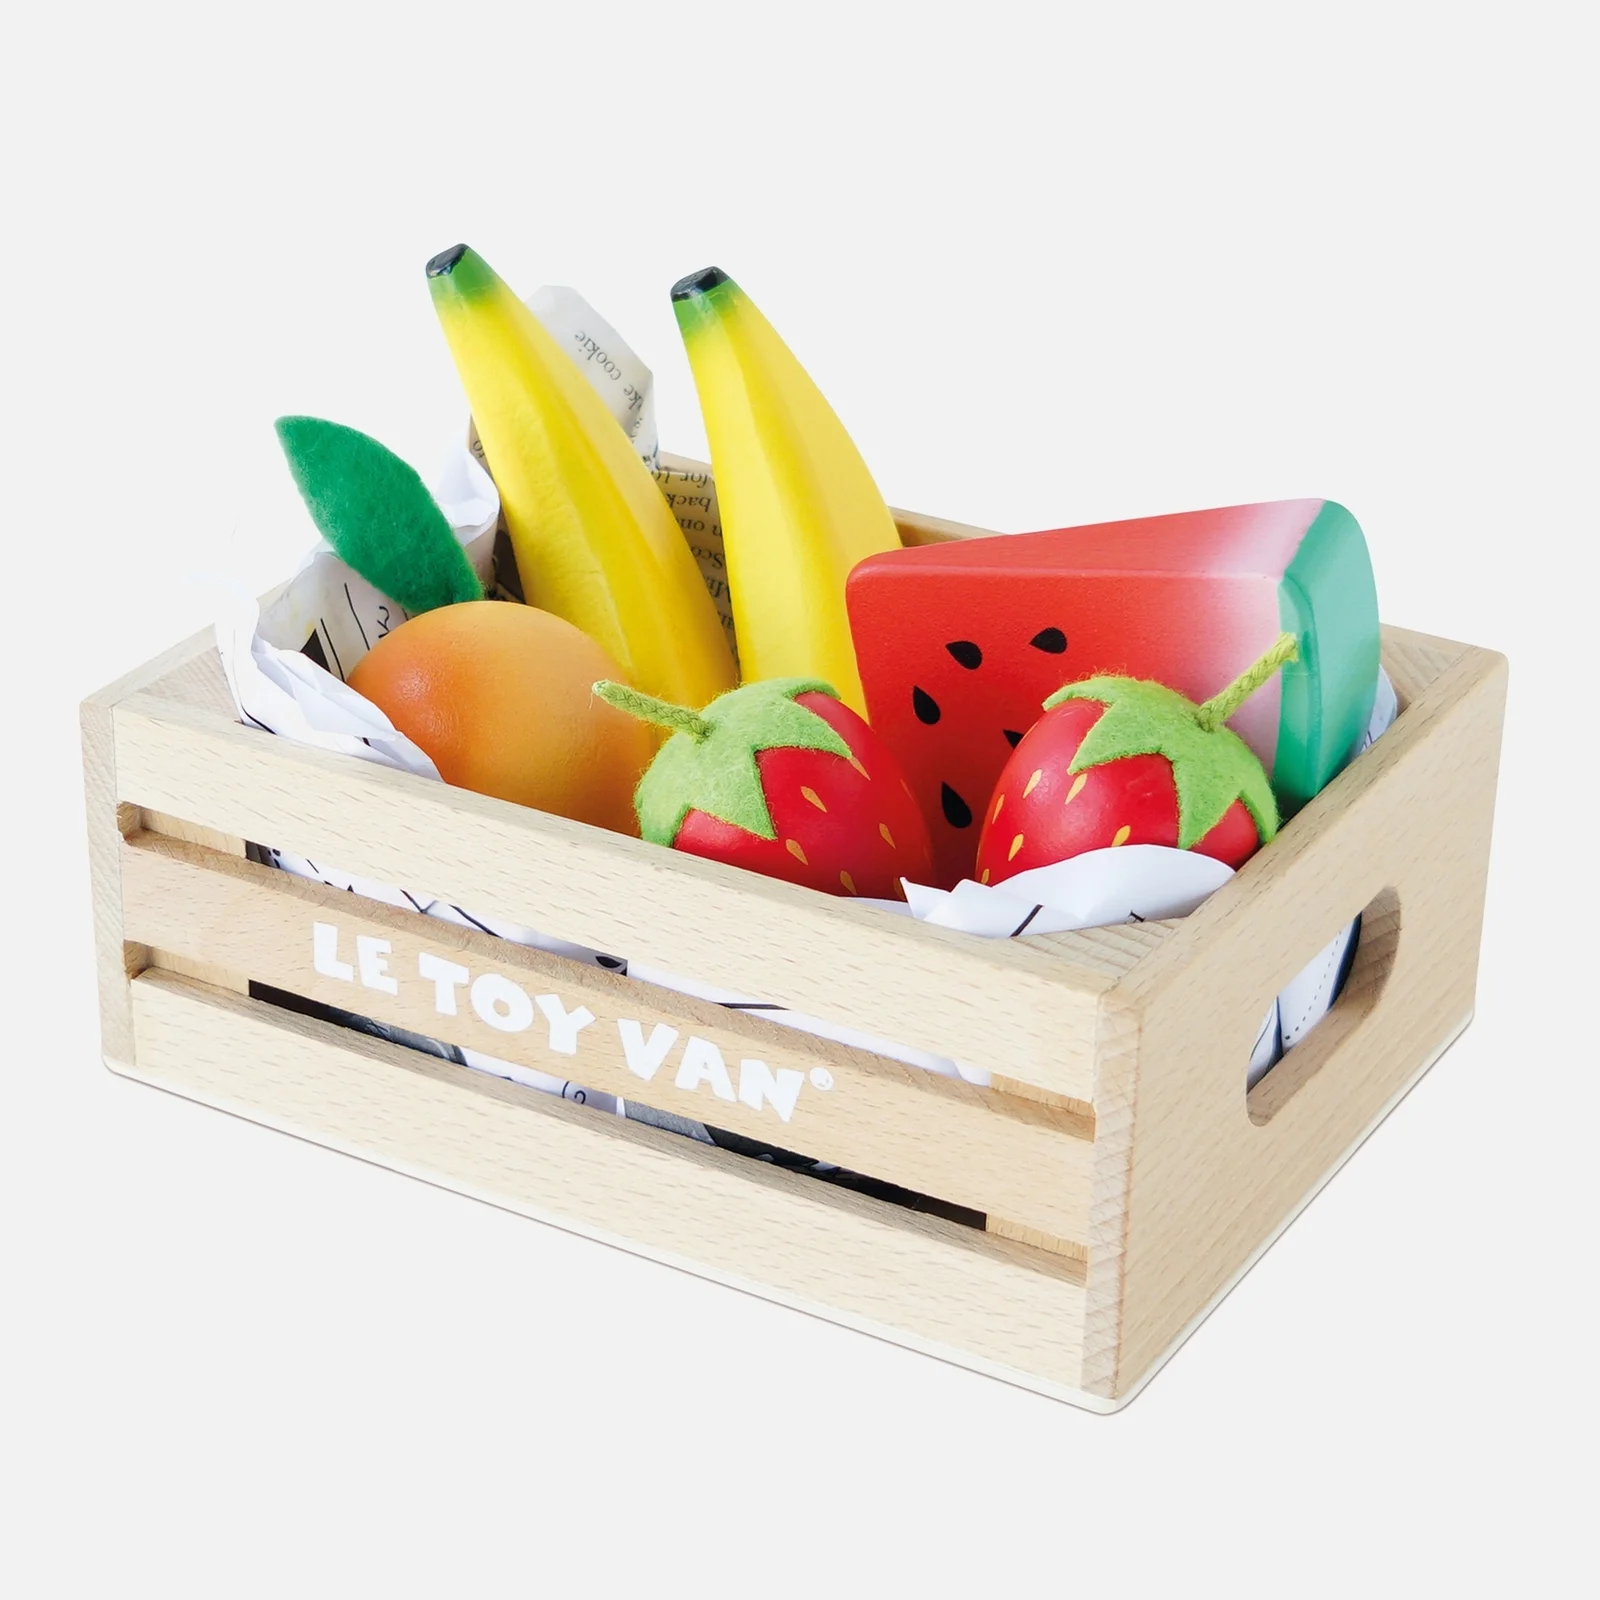 Le Toy Van 5 A Day Fruit Box Image 1